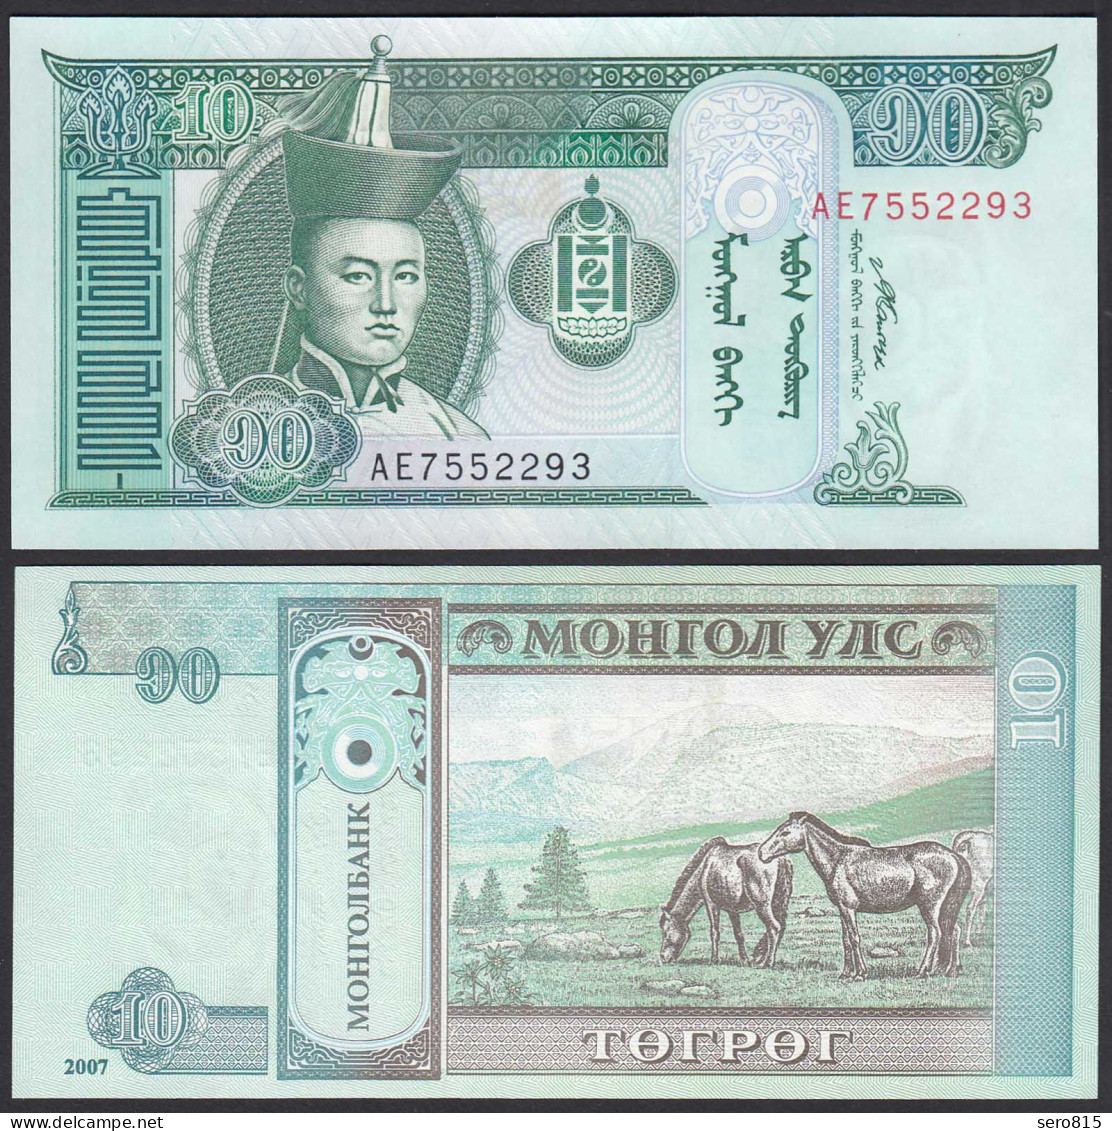 Mongolei - Mongolia 10 Tugrik Banknote 1993 Pick 54 UNC (1)   (30163 - Sonstige – Asien